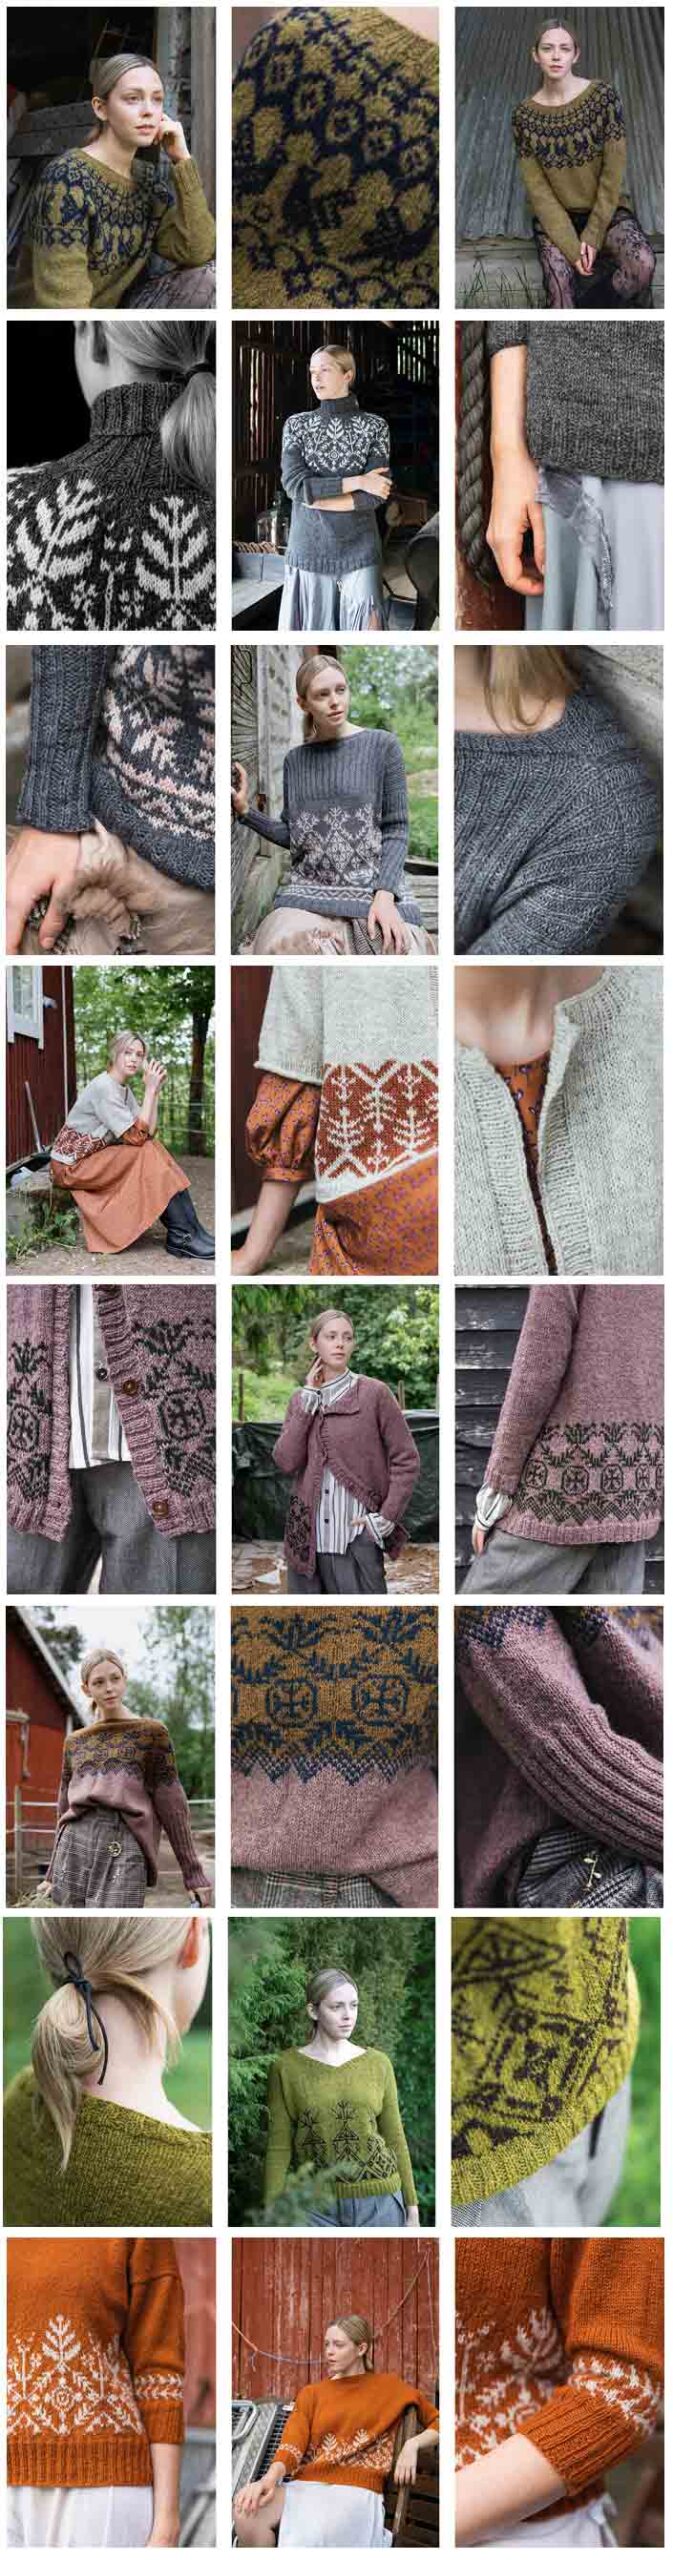 Knitted Kalevala by Jenna Kostet de afstap Amsterdam